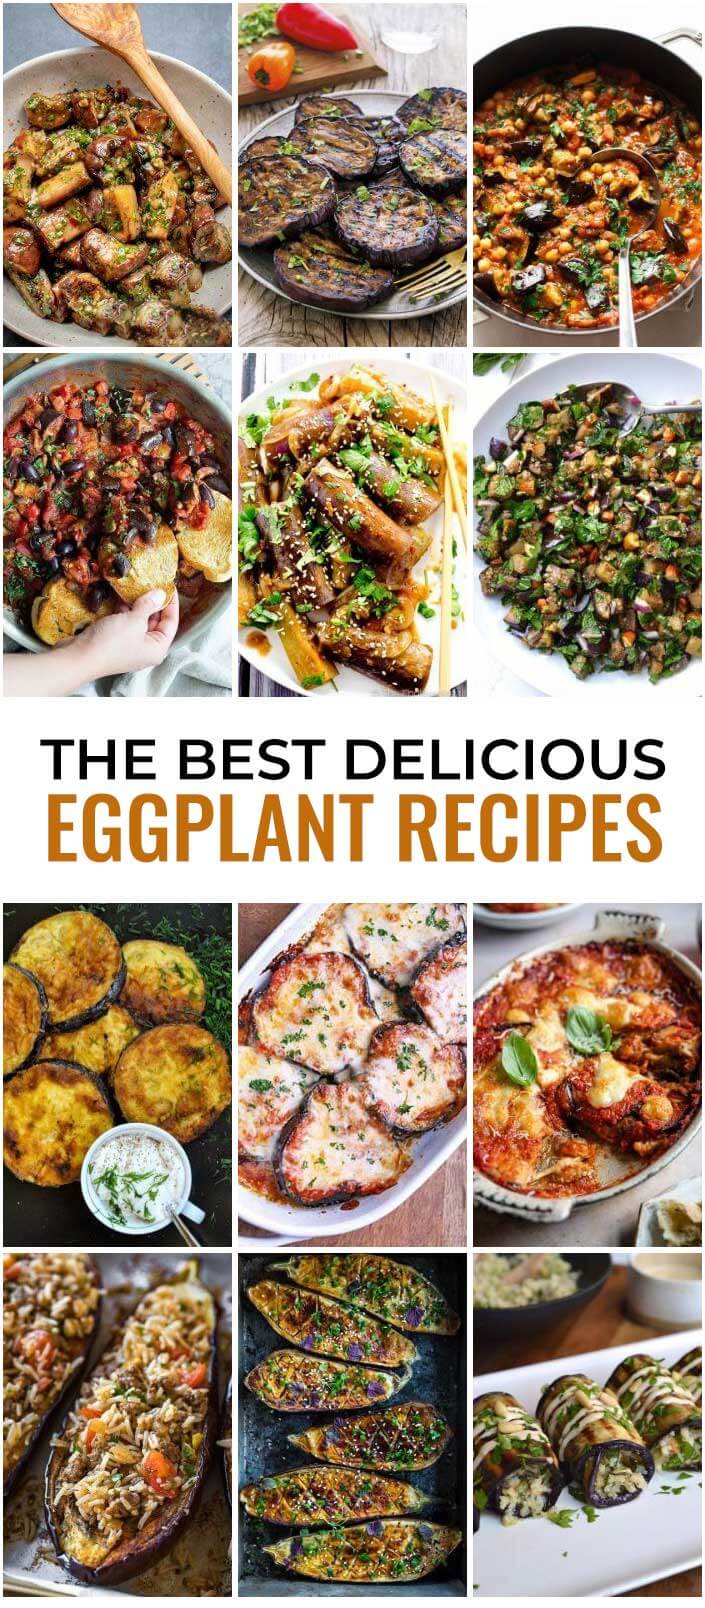 The Best Delicious Eggplant Recipes